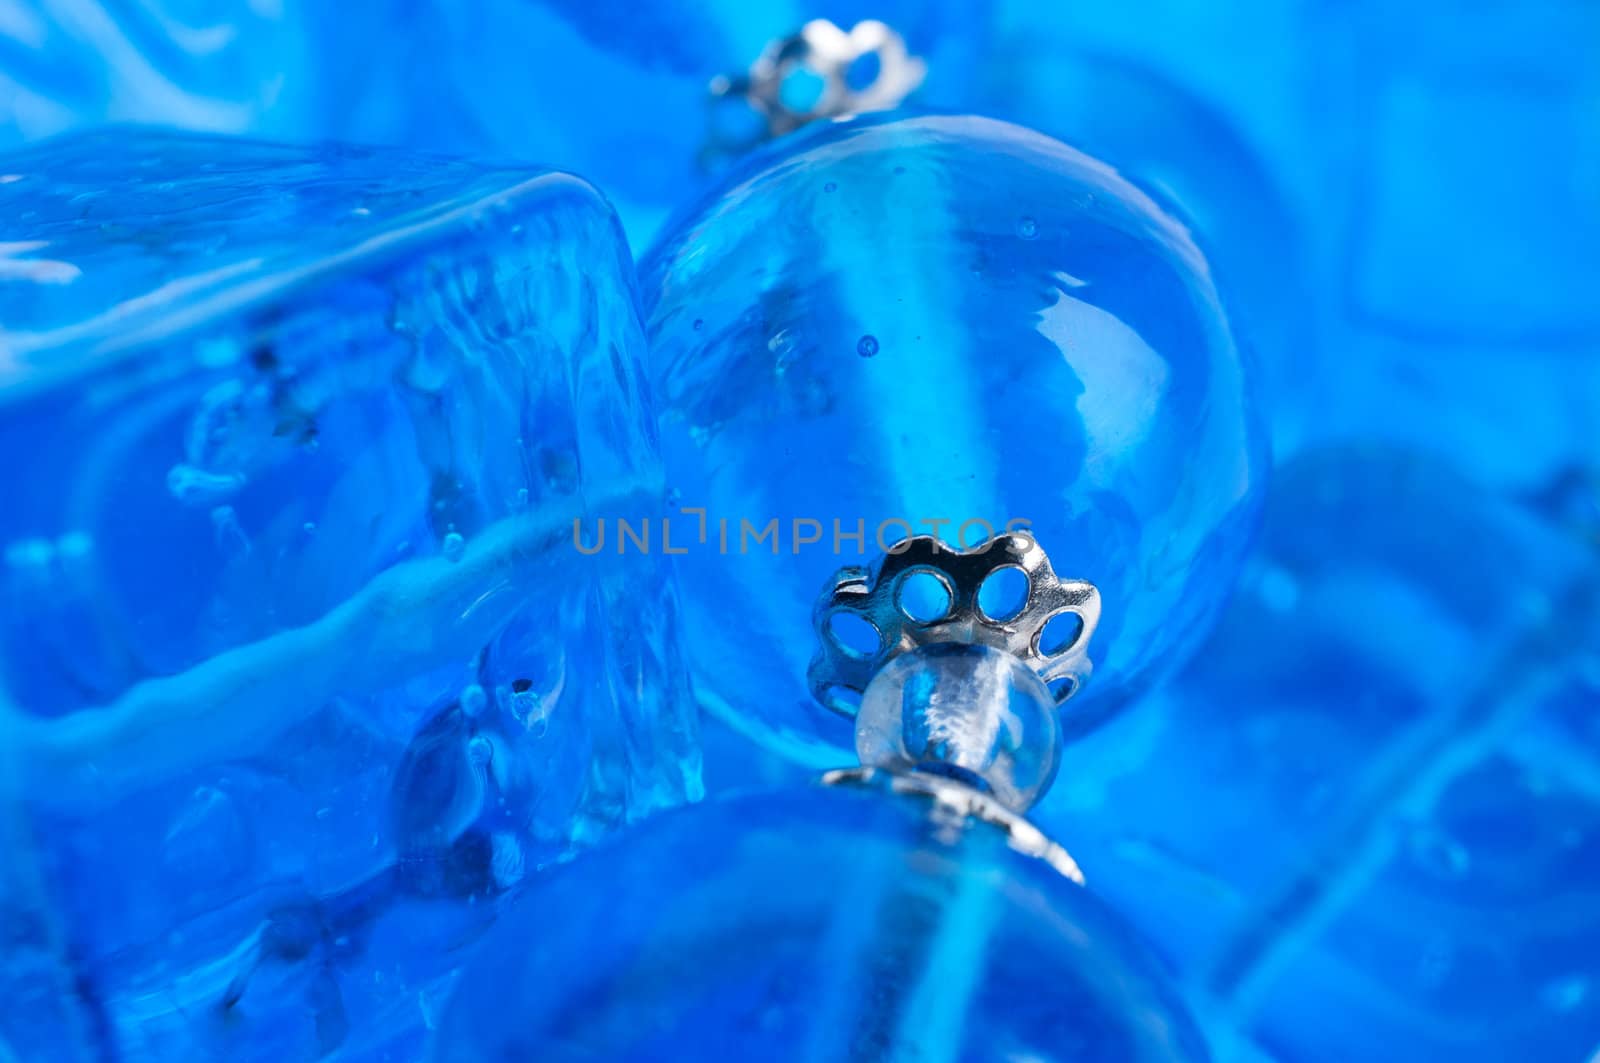 Blue glass beads background by Nanisimova